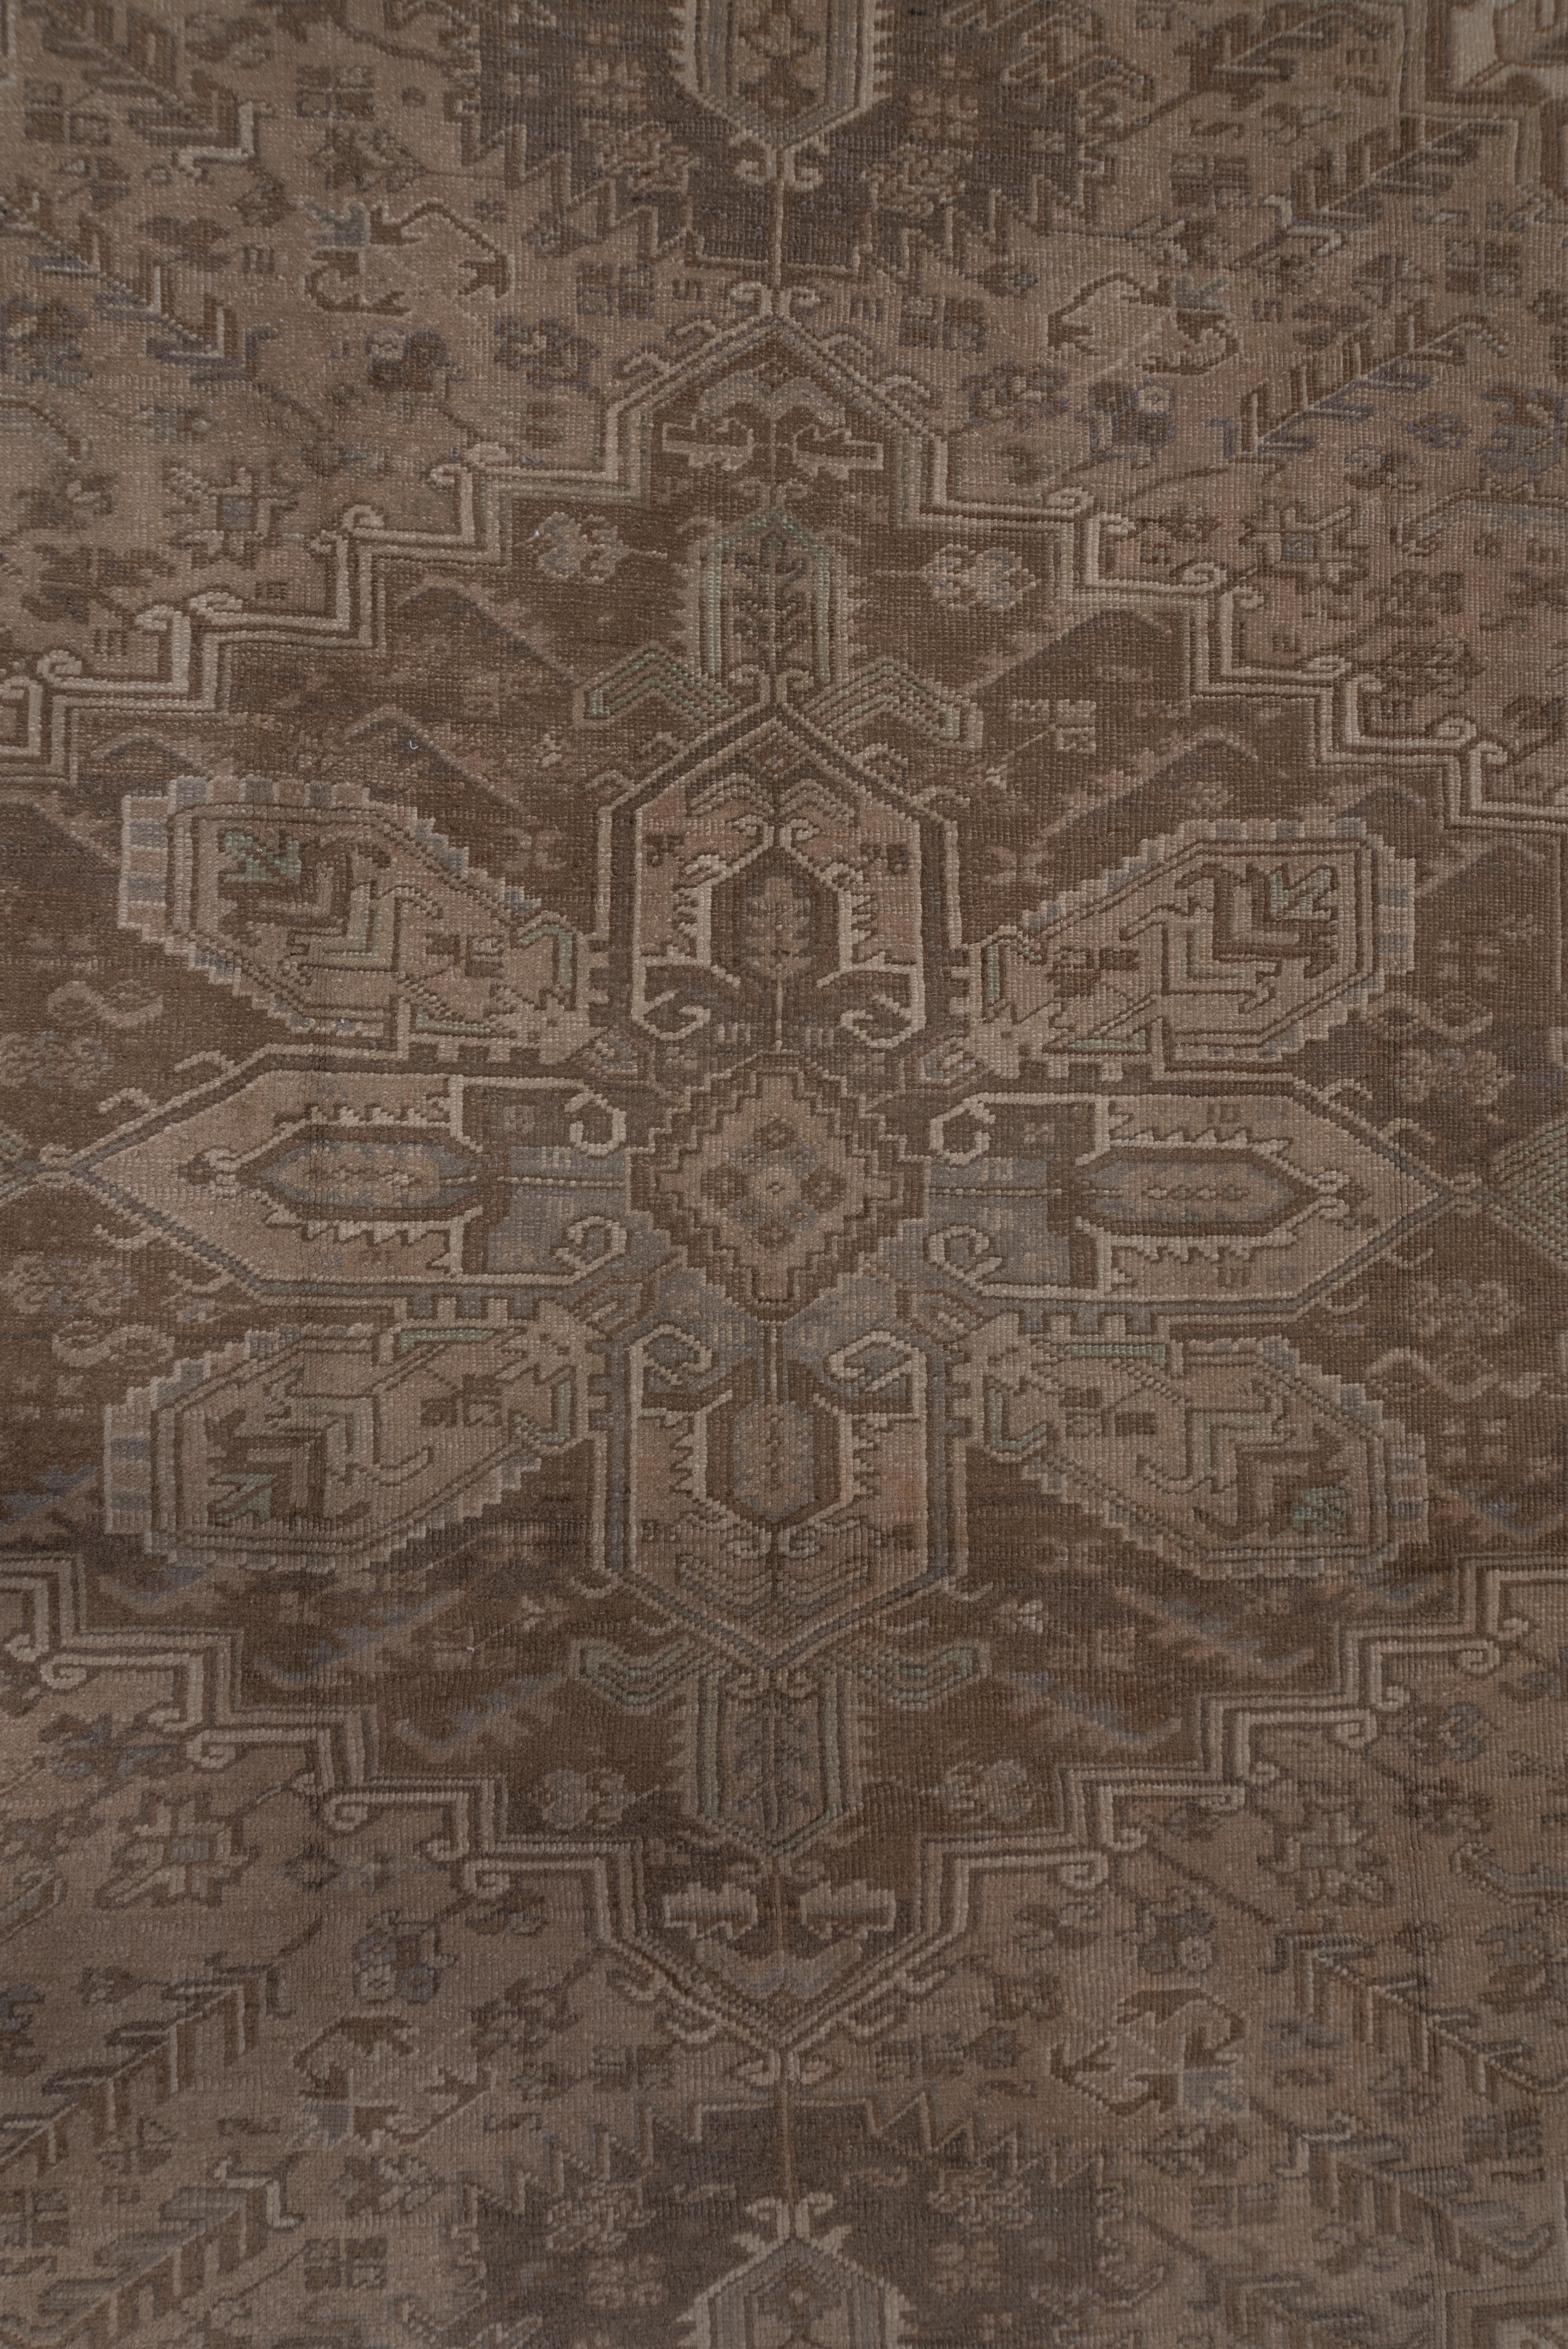 Persian Antique Heriz Carpet with Neutral Palette, circa 1910s